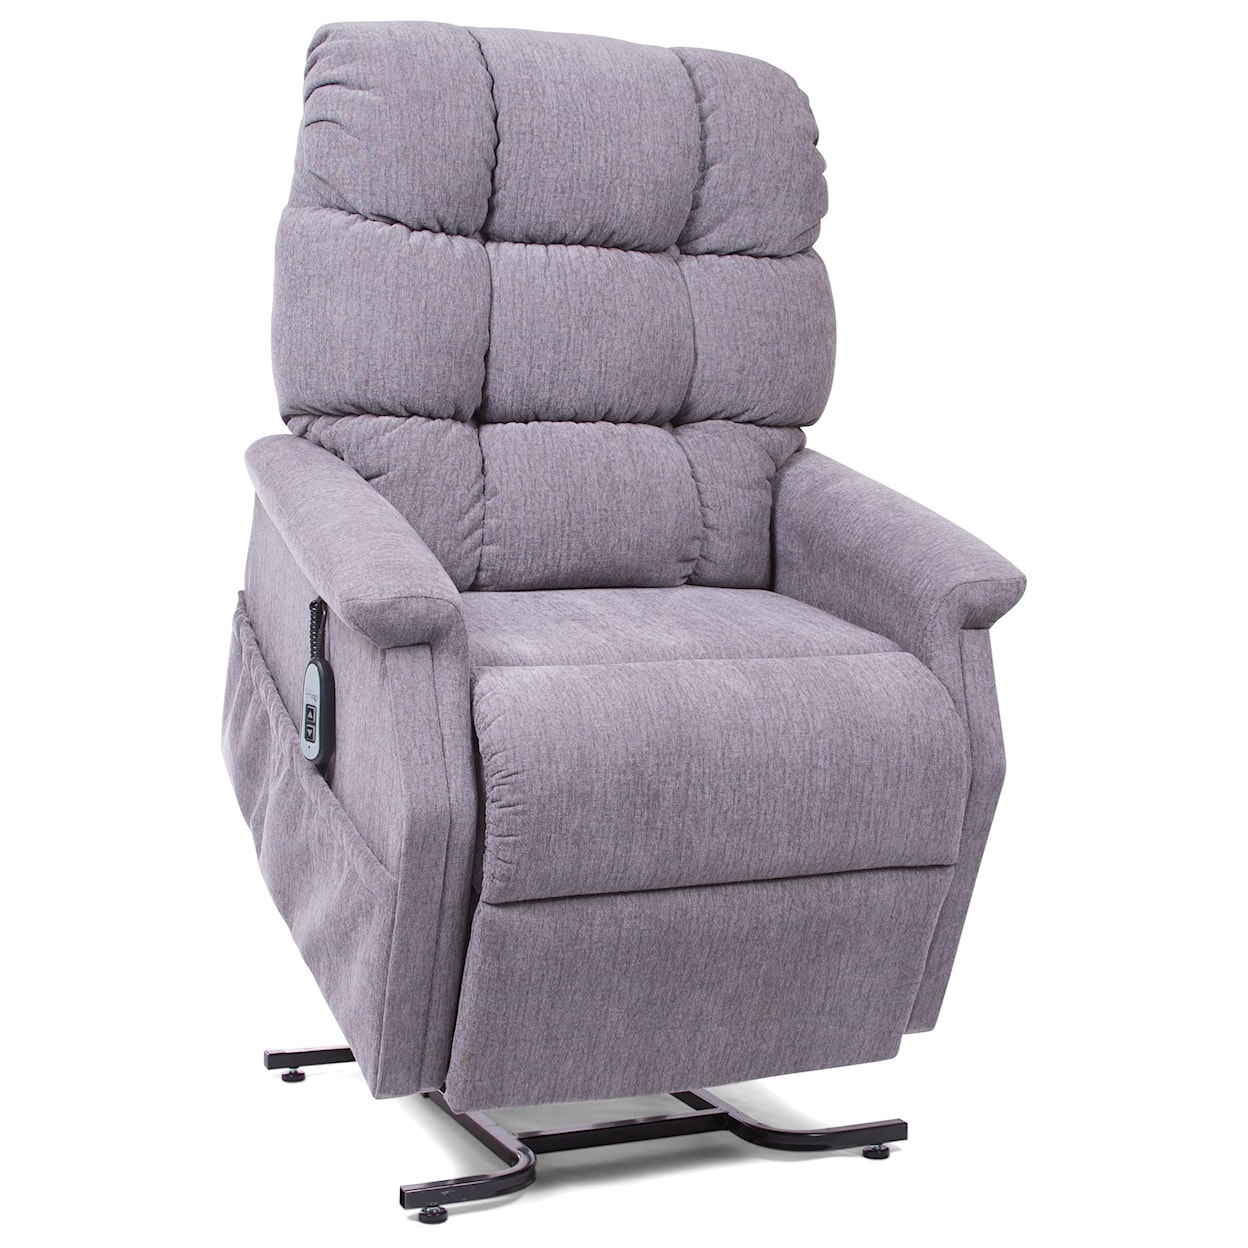 UltraComfort Tranquility Power Lift Chair Heat+Massage